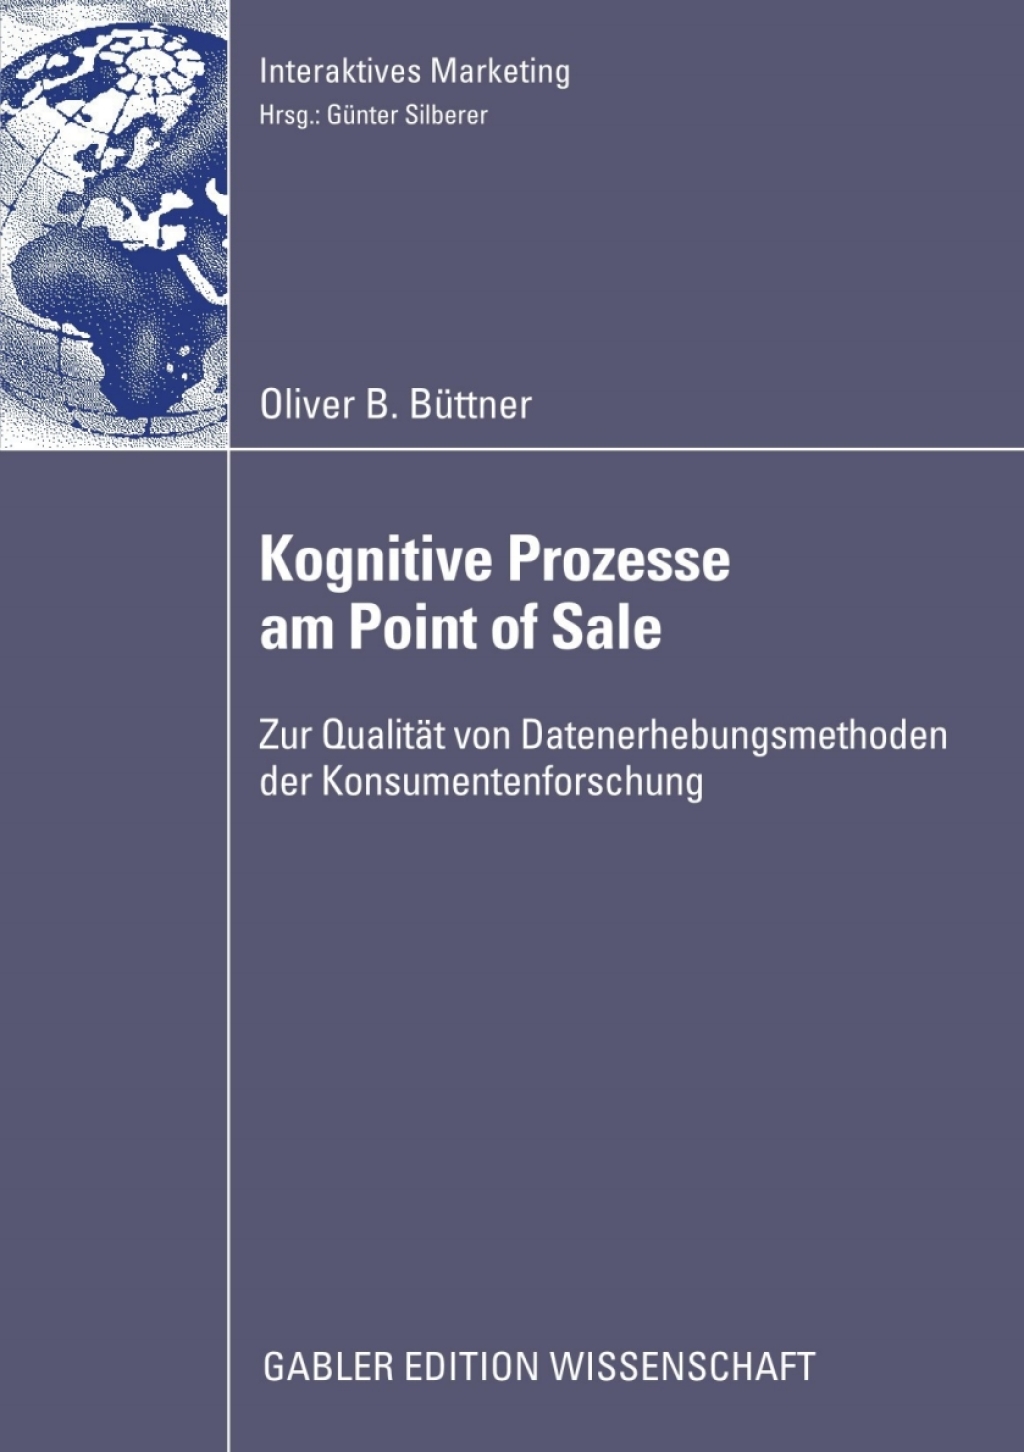 ISBN 9783834914927 product image for Kognitive Prozesse am Point of Sale (eBook Rental) | upcitemdb.com